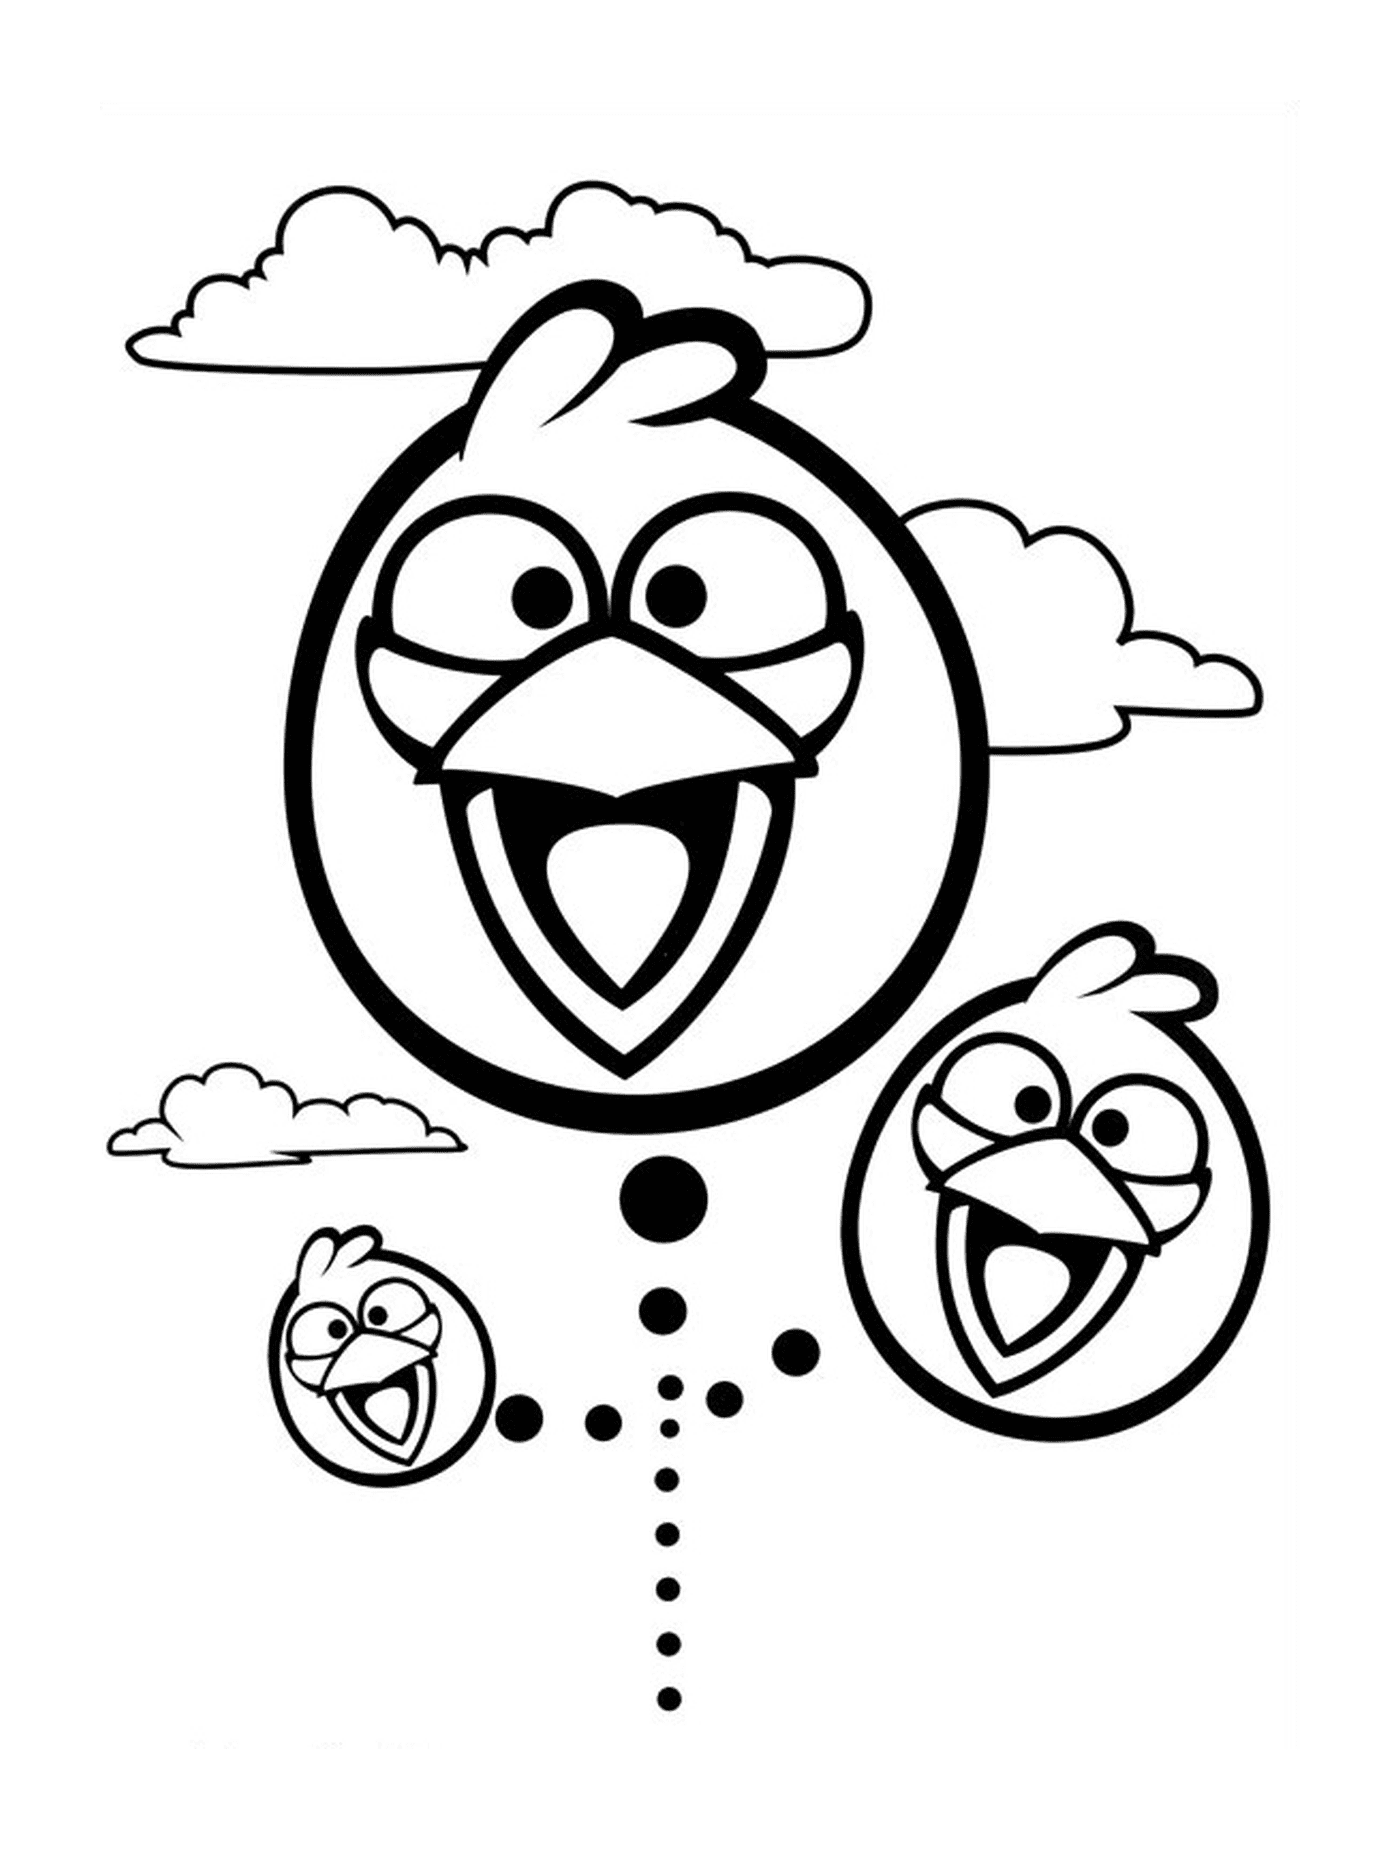   Angry Birds souriant et joyeux 